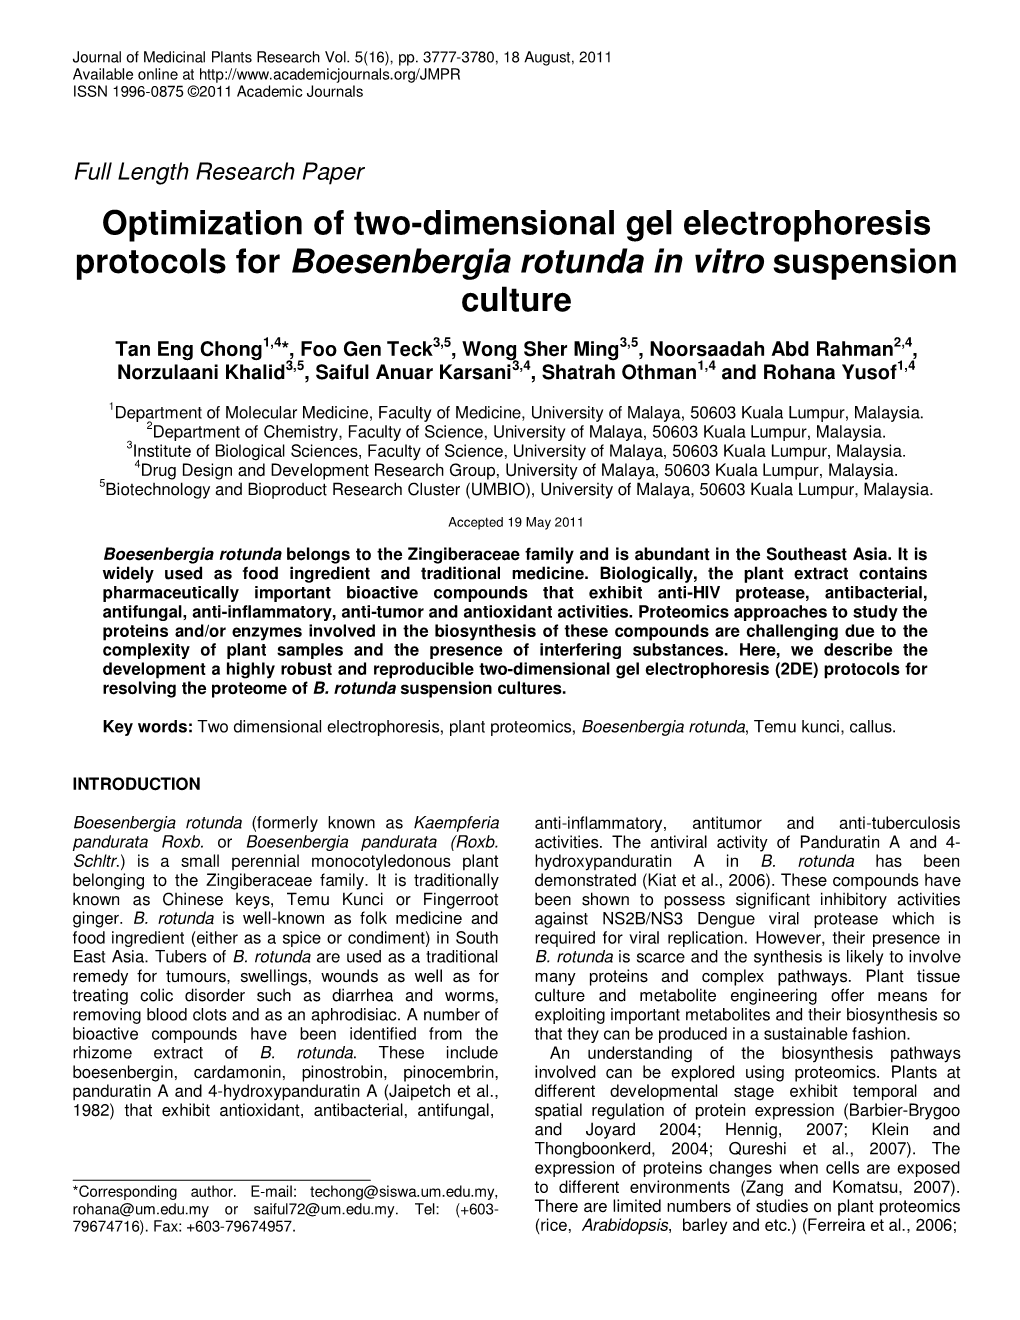 Optimization of Two-Dimensional Gel Electrophoresis Protocols for Boesenbergia Rotunda in Vitro Suspension Culture